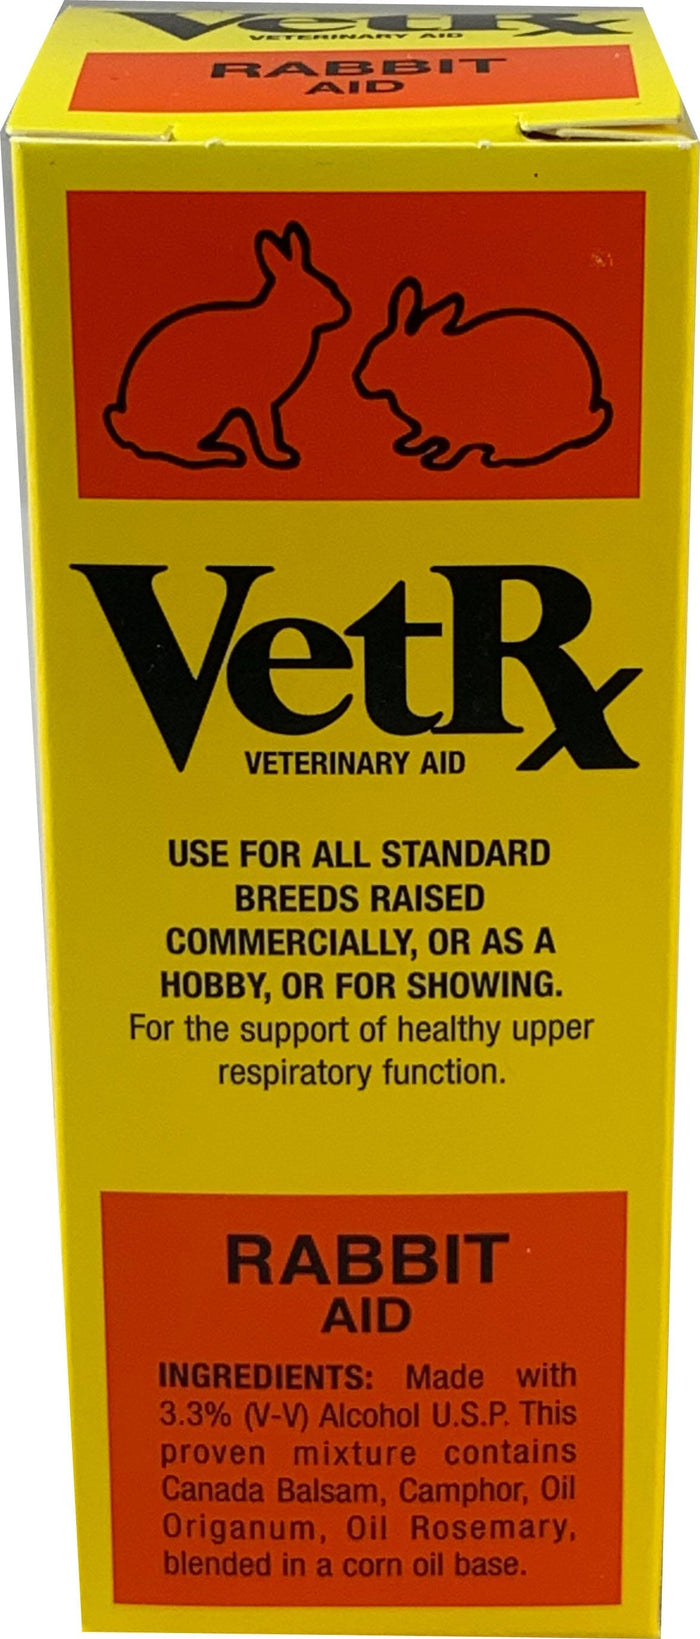 Vetrx Vetrx Rabbit Remedy Small Animal Medication - 2 Oz